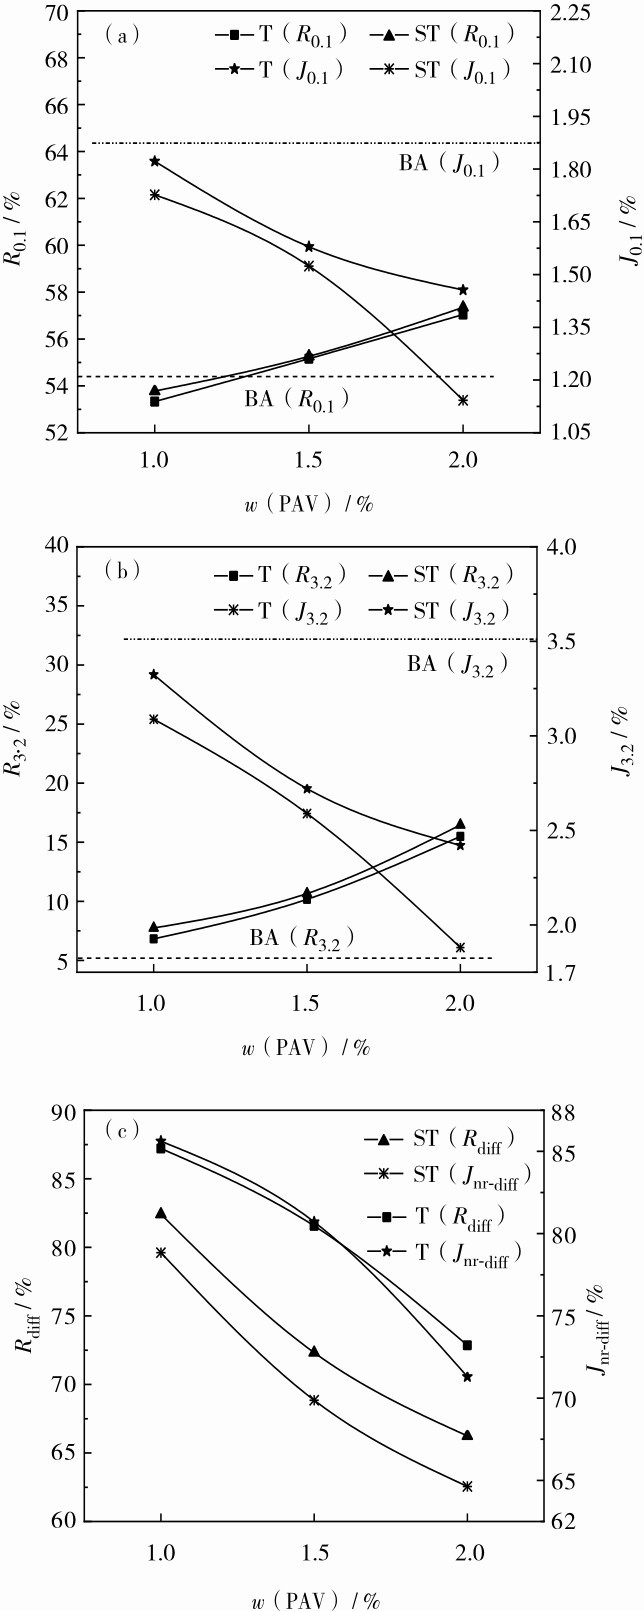 图7 MSCR试验结果（a）0. 1 kPa荷载水平下R和J与PAV纤维质量分数的关系；（b）3. 2 kPa荷载水平下R和J与PAV纤维质量分数的关系；（c）应力敏感性随纤维质量分数的变化Fig. 7 MSCR results. (a) Relationship between R, J and PAV fiber mass fraction at 0. 1 kPa load level, (b) relationship between R, J and PAV fiber mass fraction at 3. 2 kPa load level, and (c) variation of stress sensitivity with PAV fiber mass fraction.